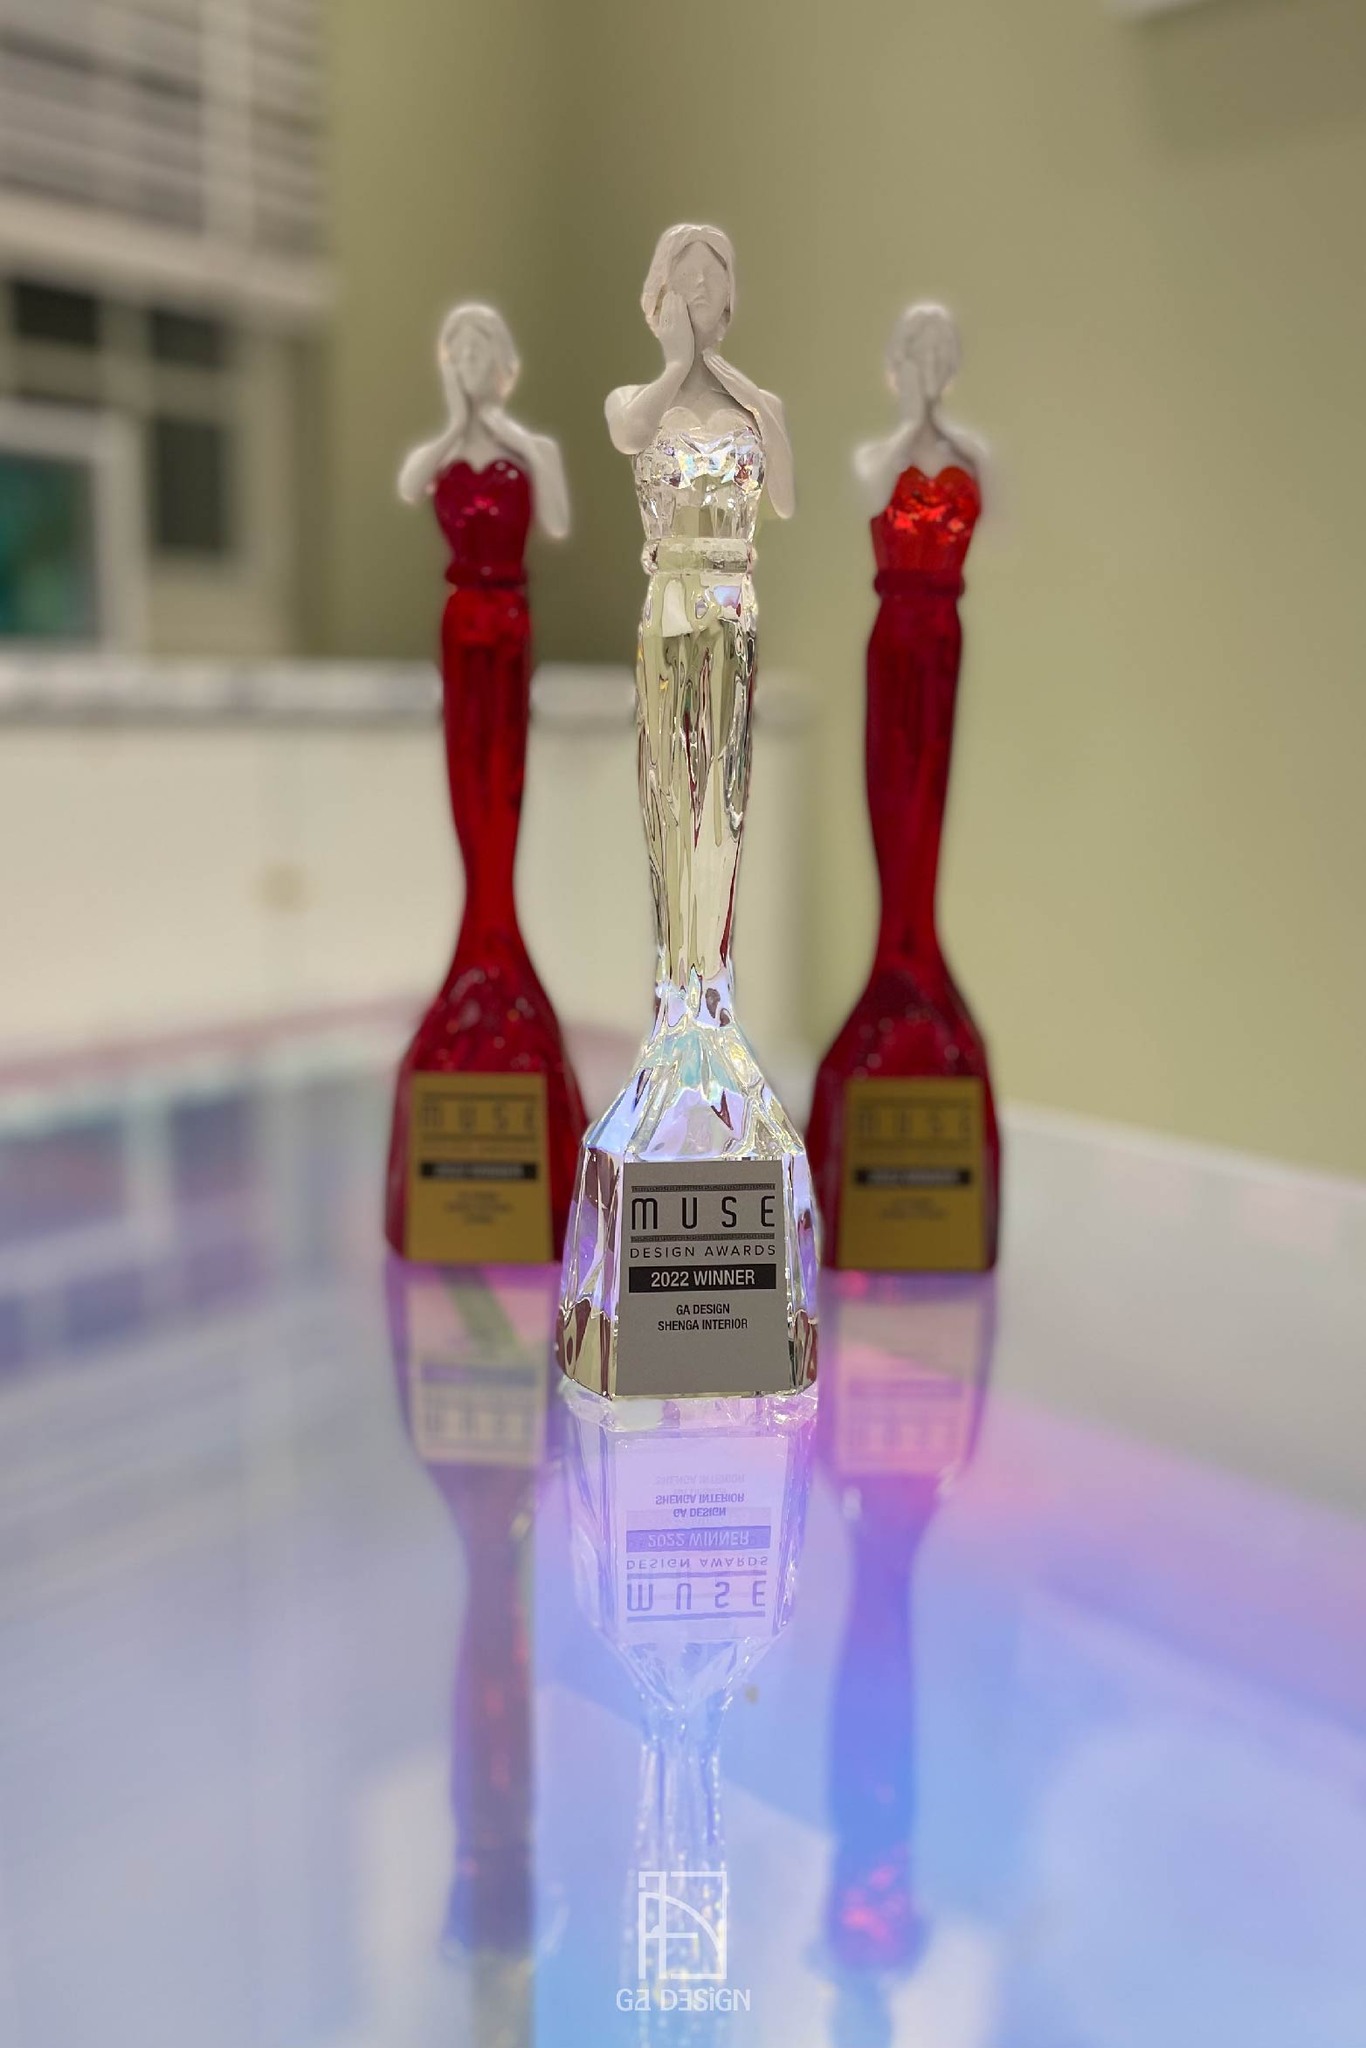 MUSE Design Awards Winner - The long-awaited goddess trophy has finally arrived!